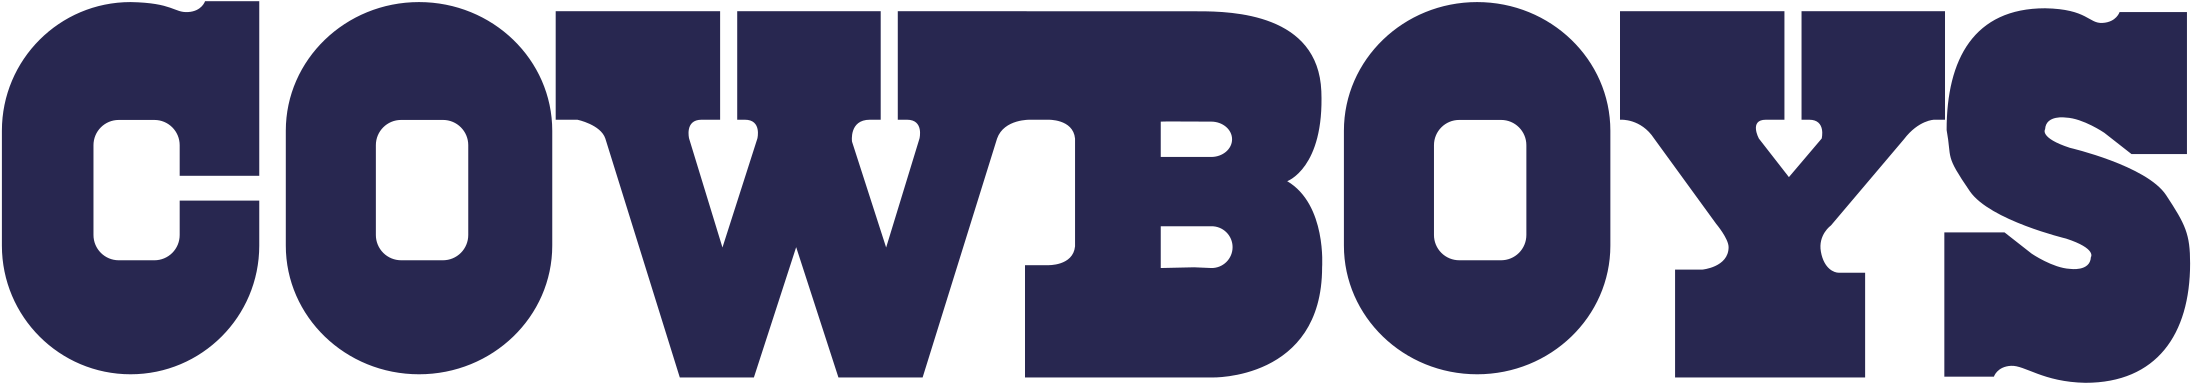 Dallas Cowboys Logo Png Transparent - Dallas Cowboys Logo Words (2400x2400), Png Download